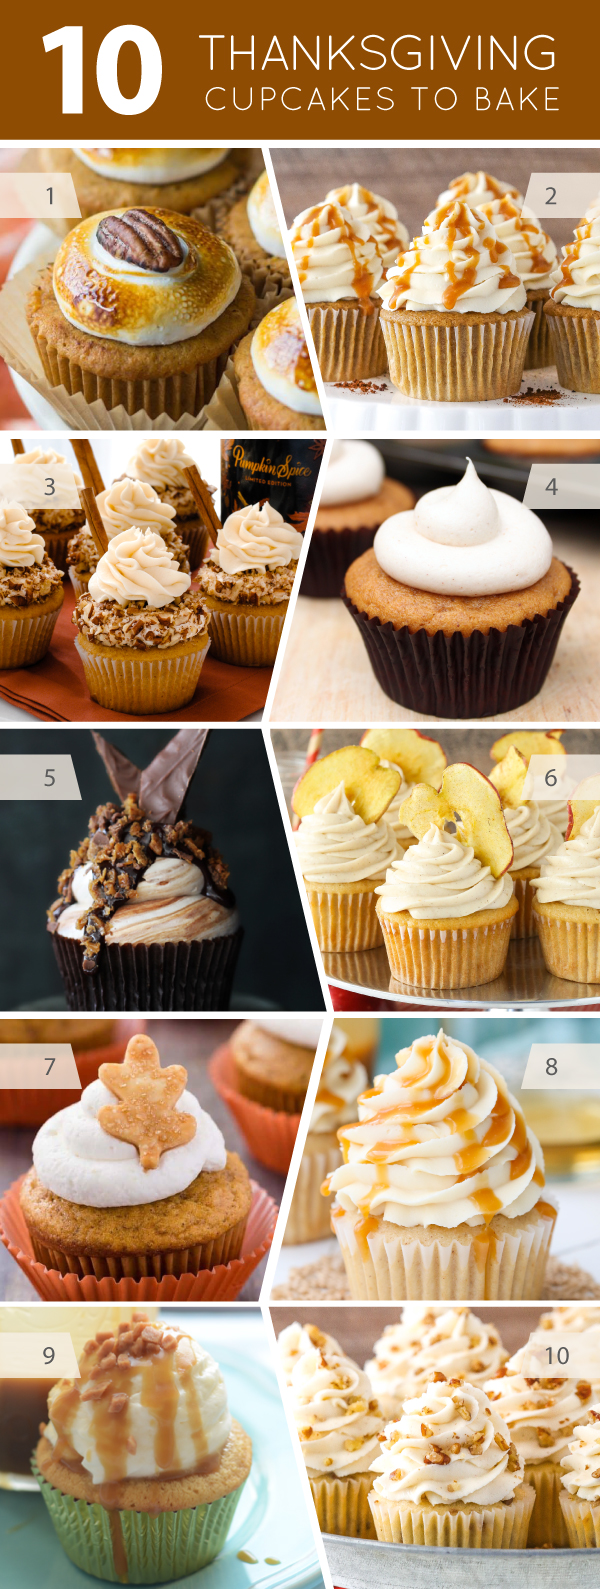 10 Thanksgiving Cupcakes to Bake | on TheCakeBlog.com